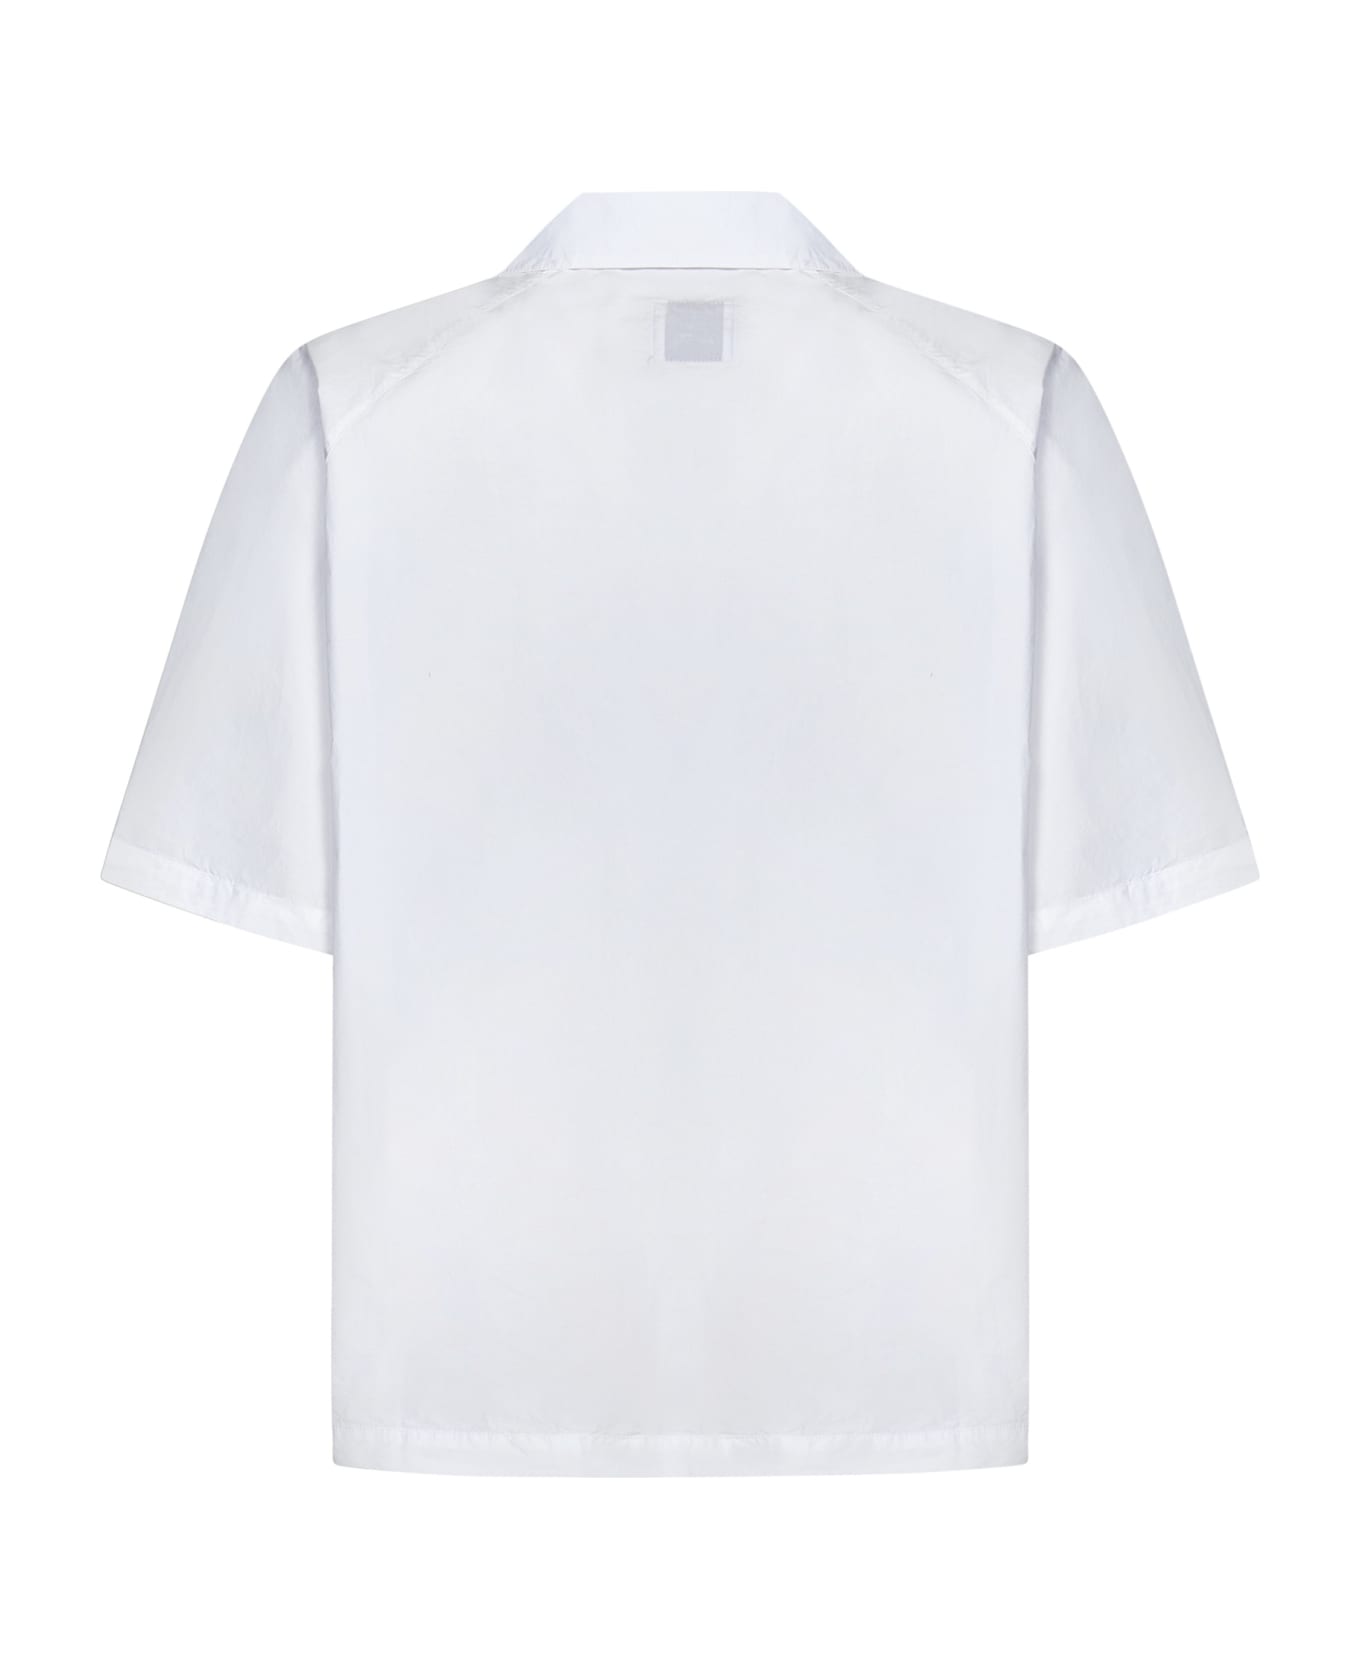 ROA Camp Shirt - White シャツ